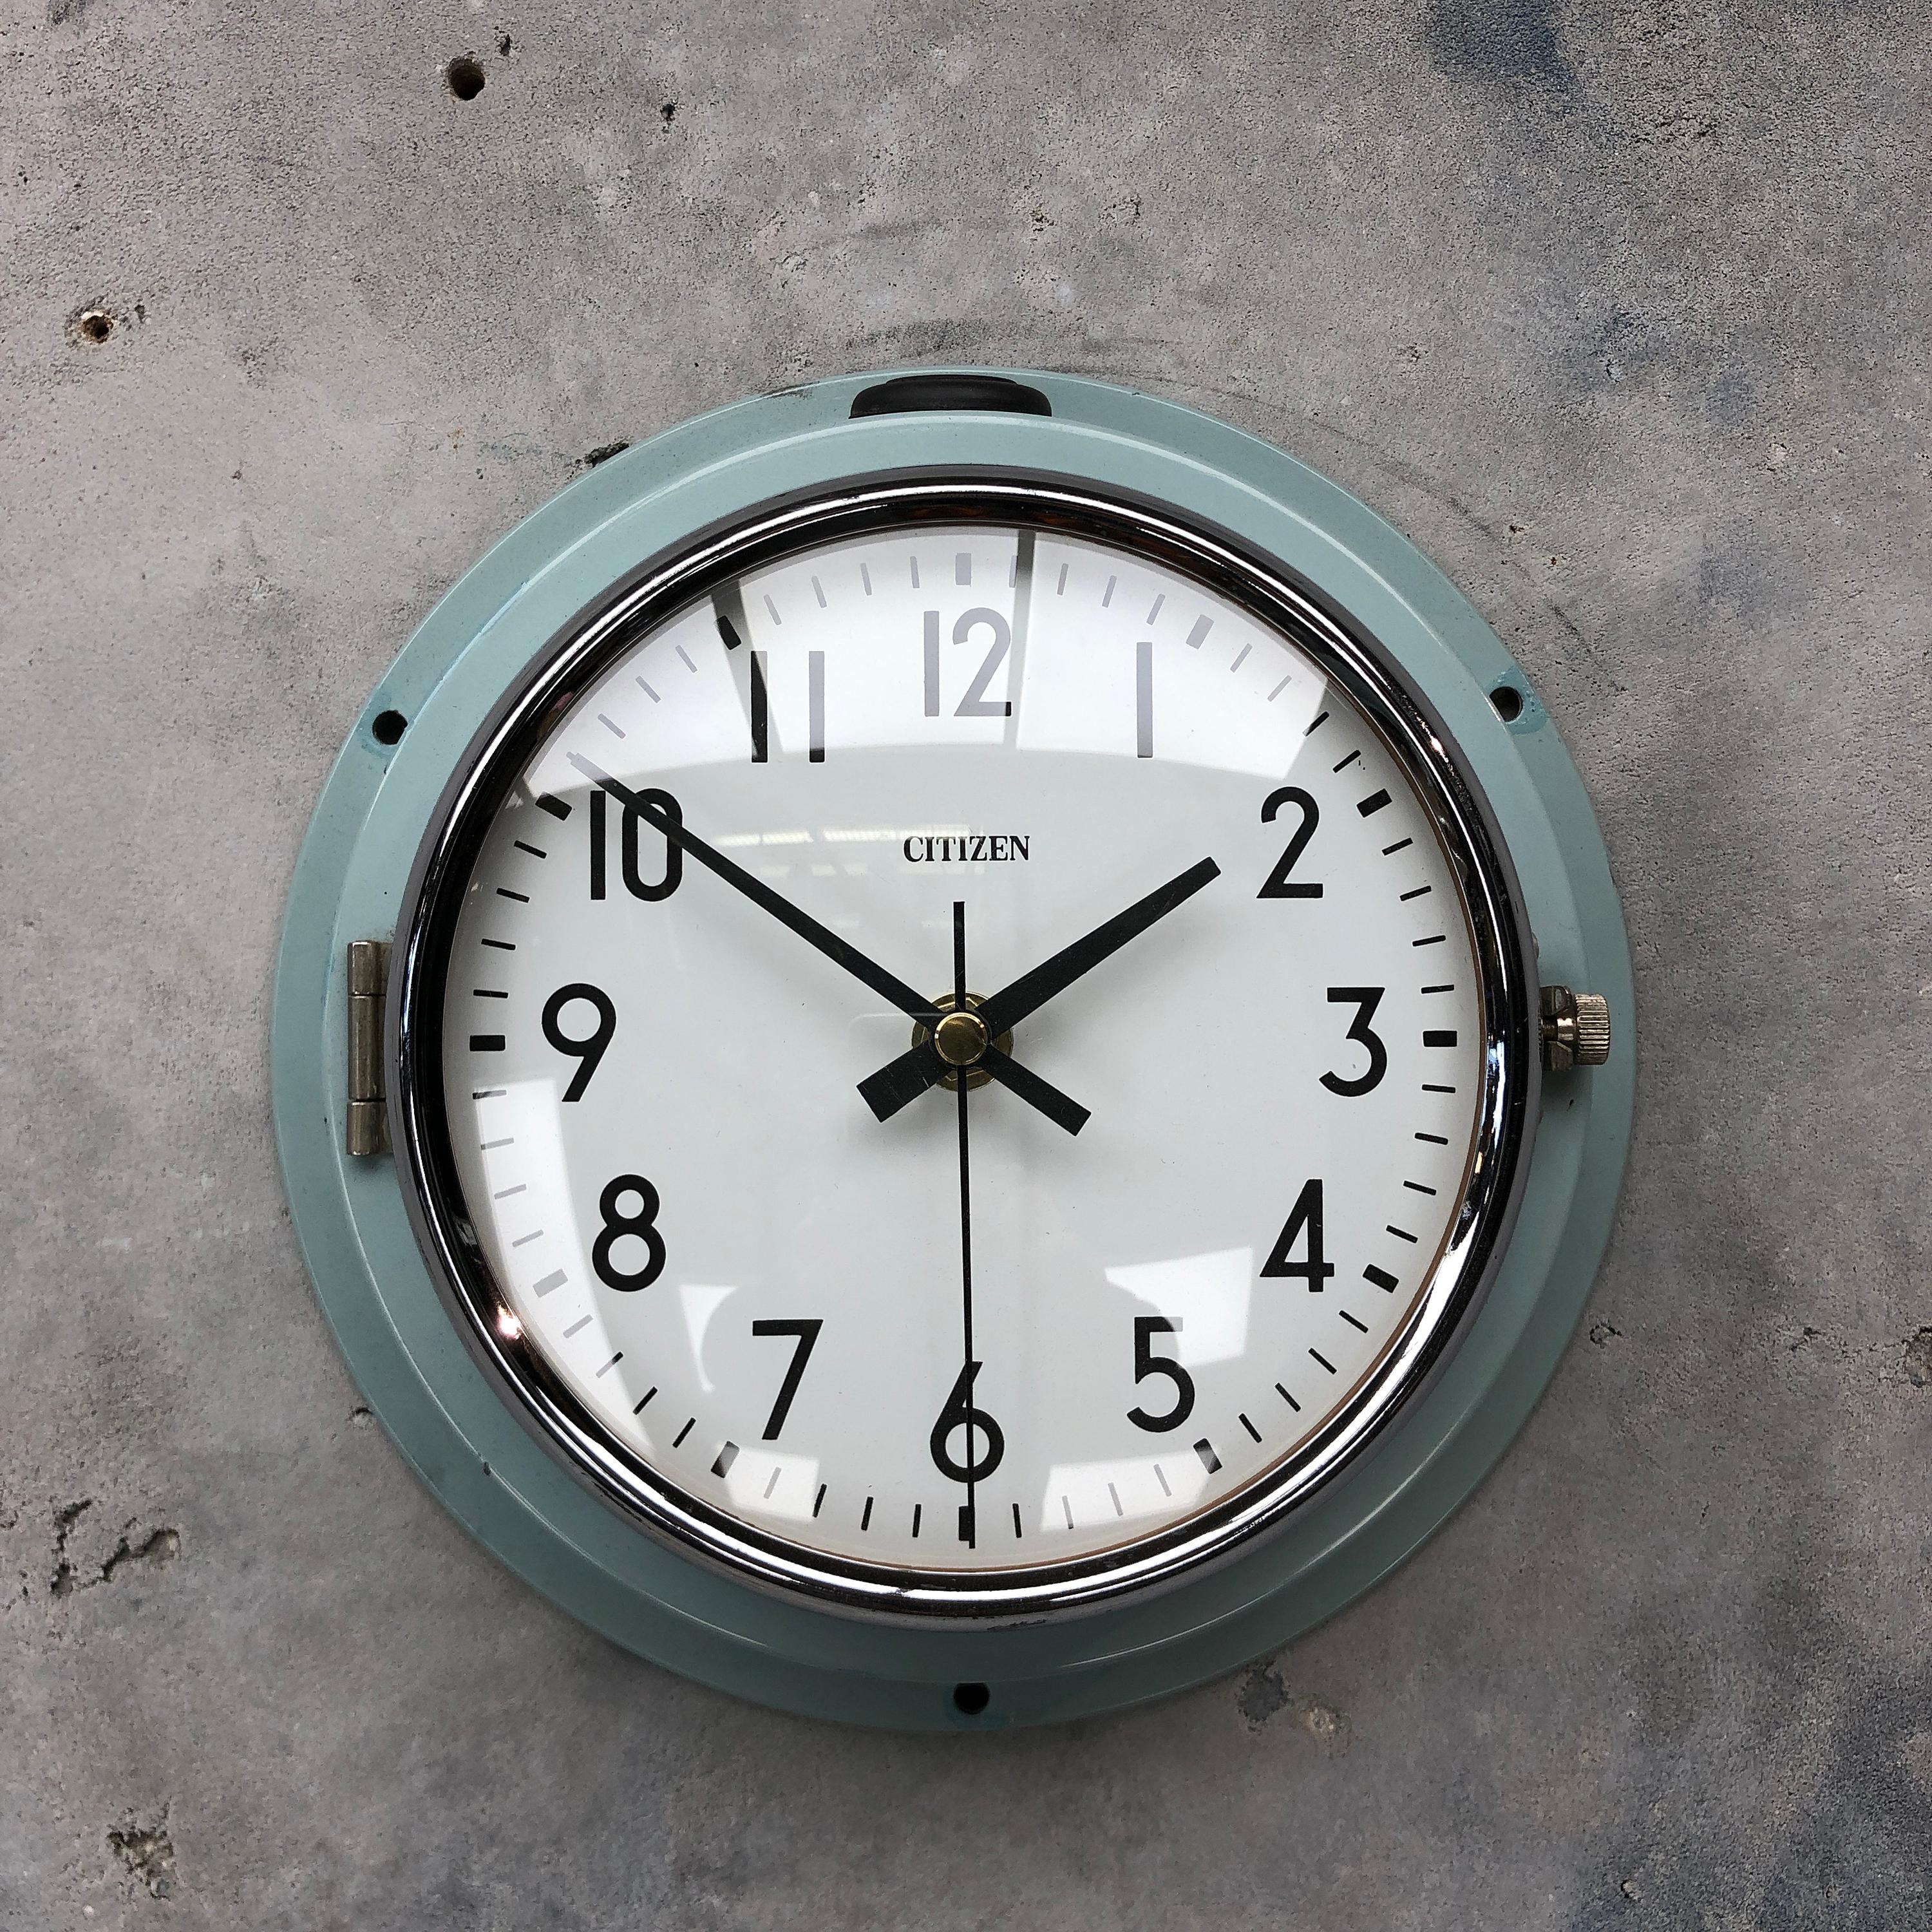 citizen wall clock vintage